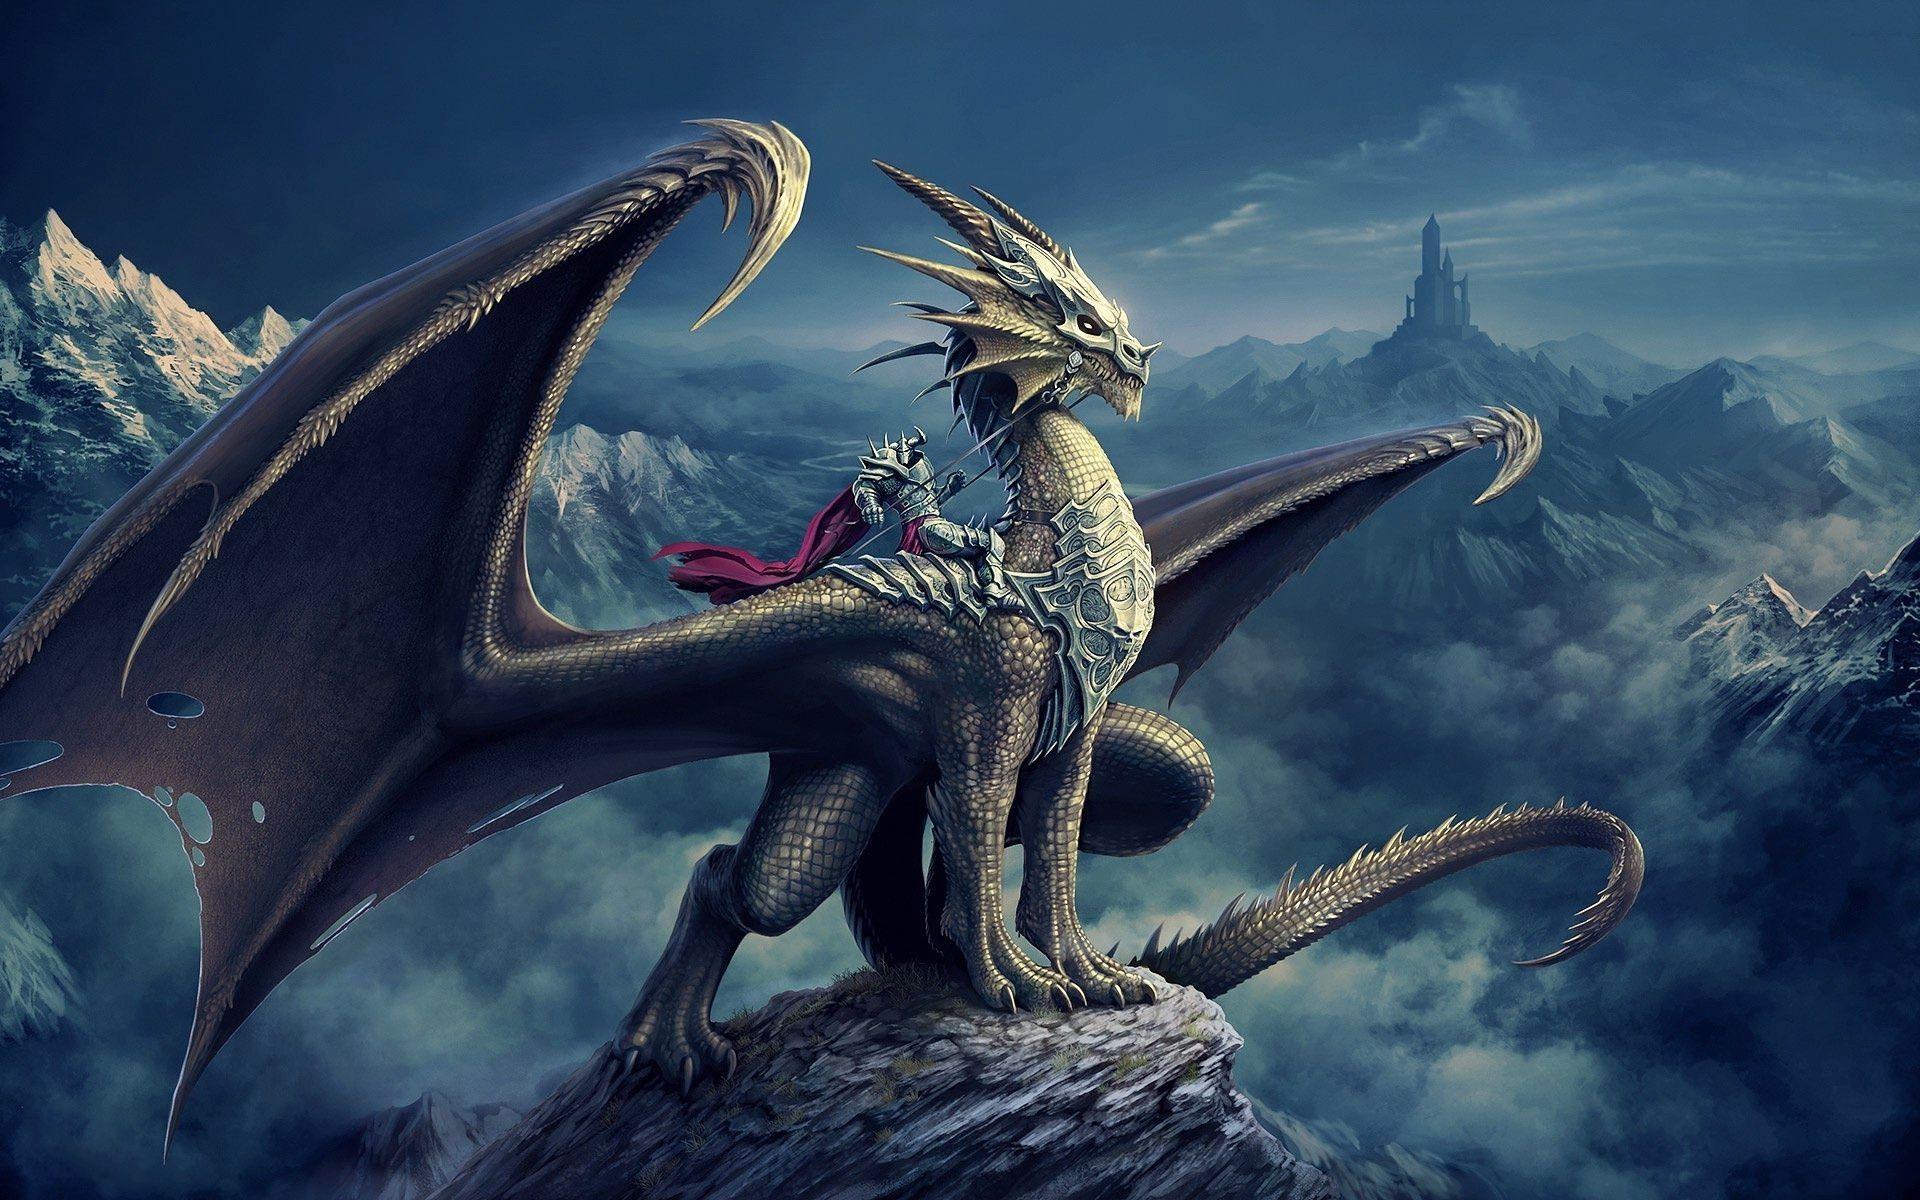 Dragon wallpaperDownload free cool High Resolution background